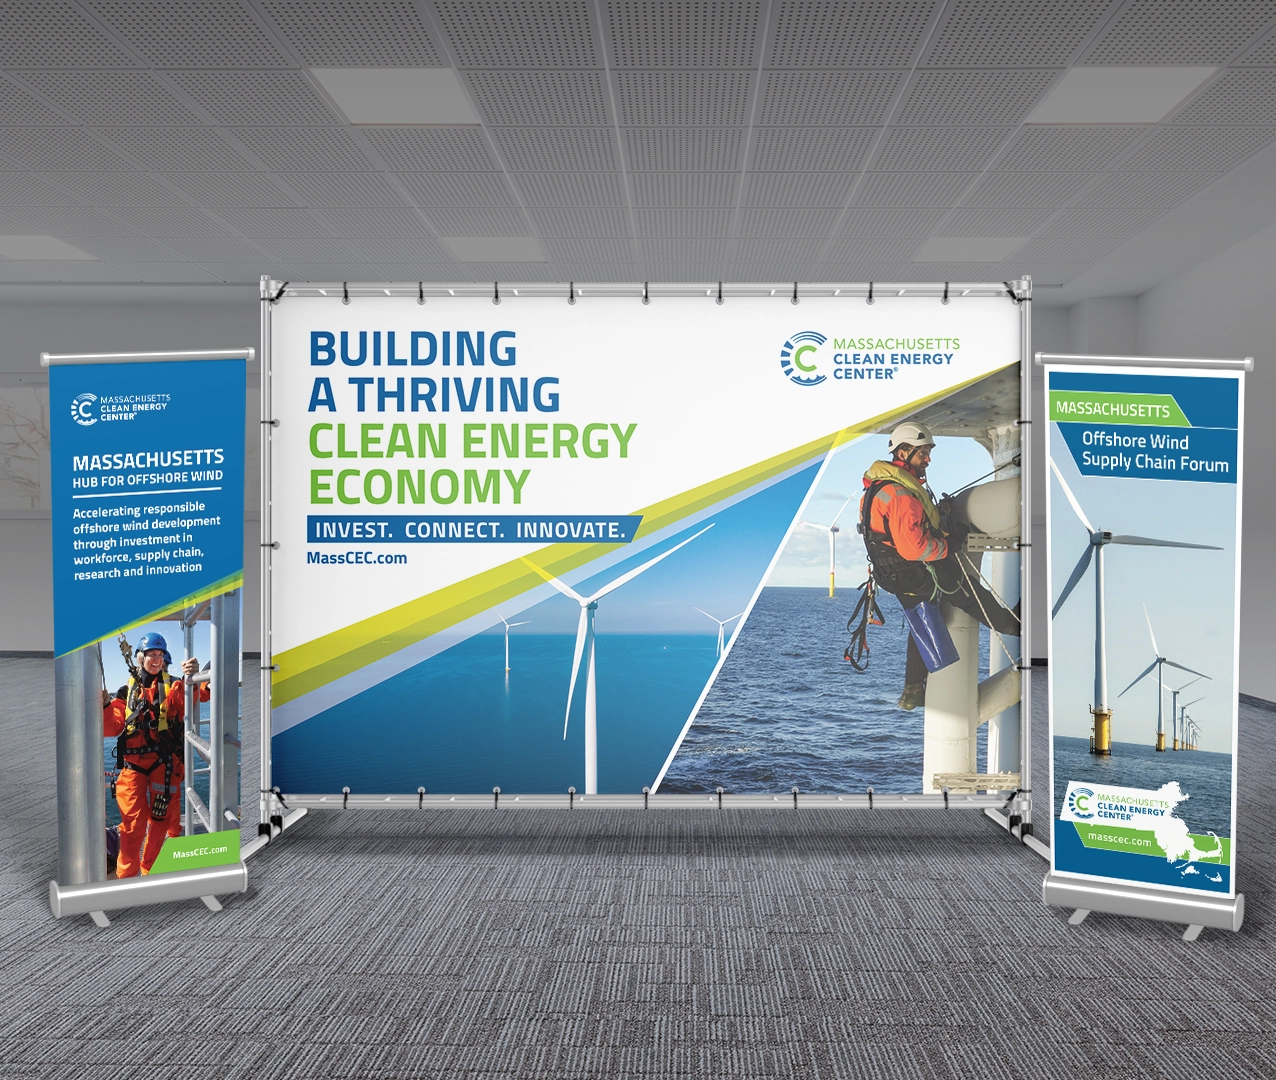 Renewable energy company trade show branding and design